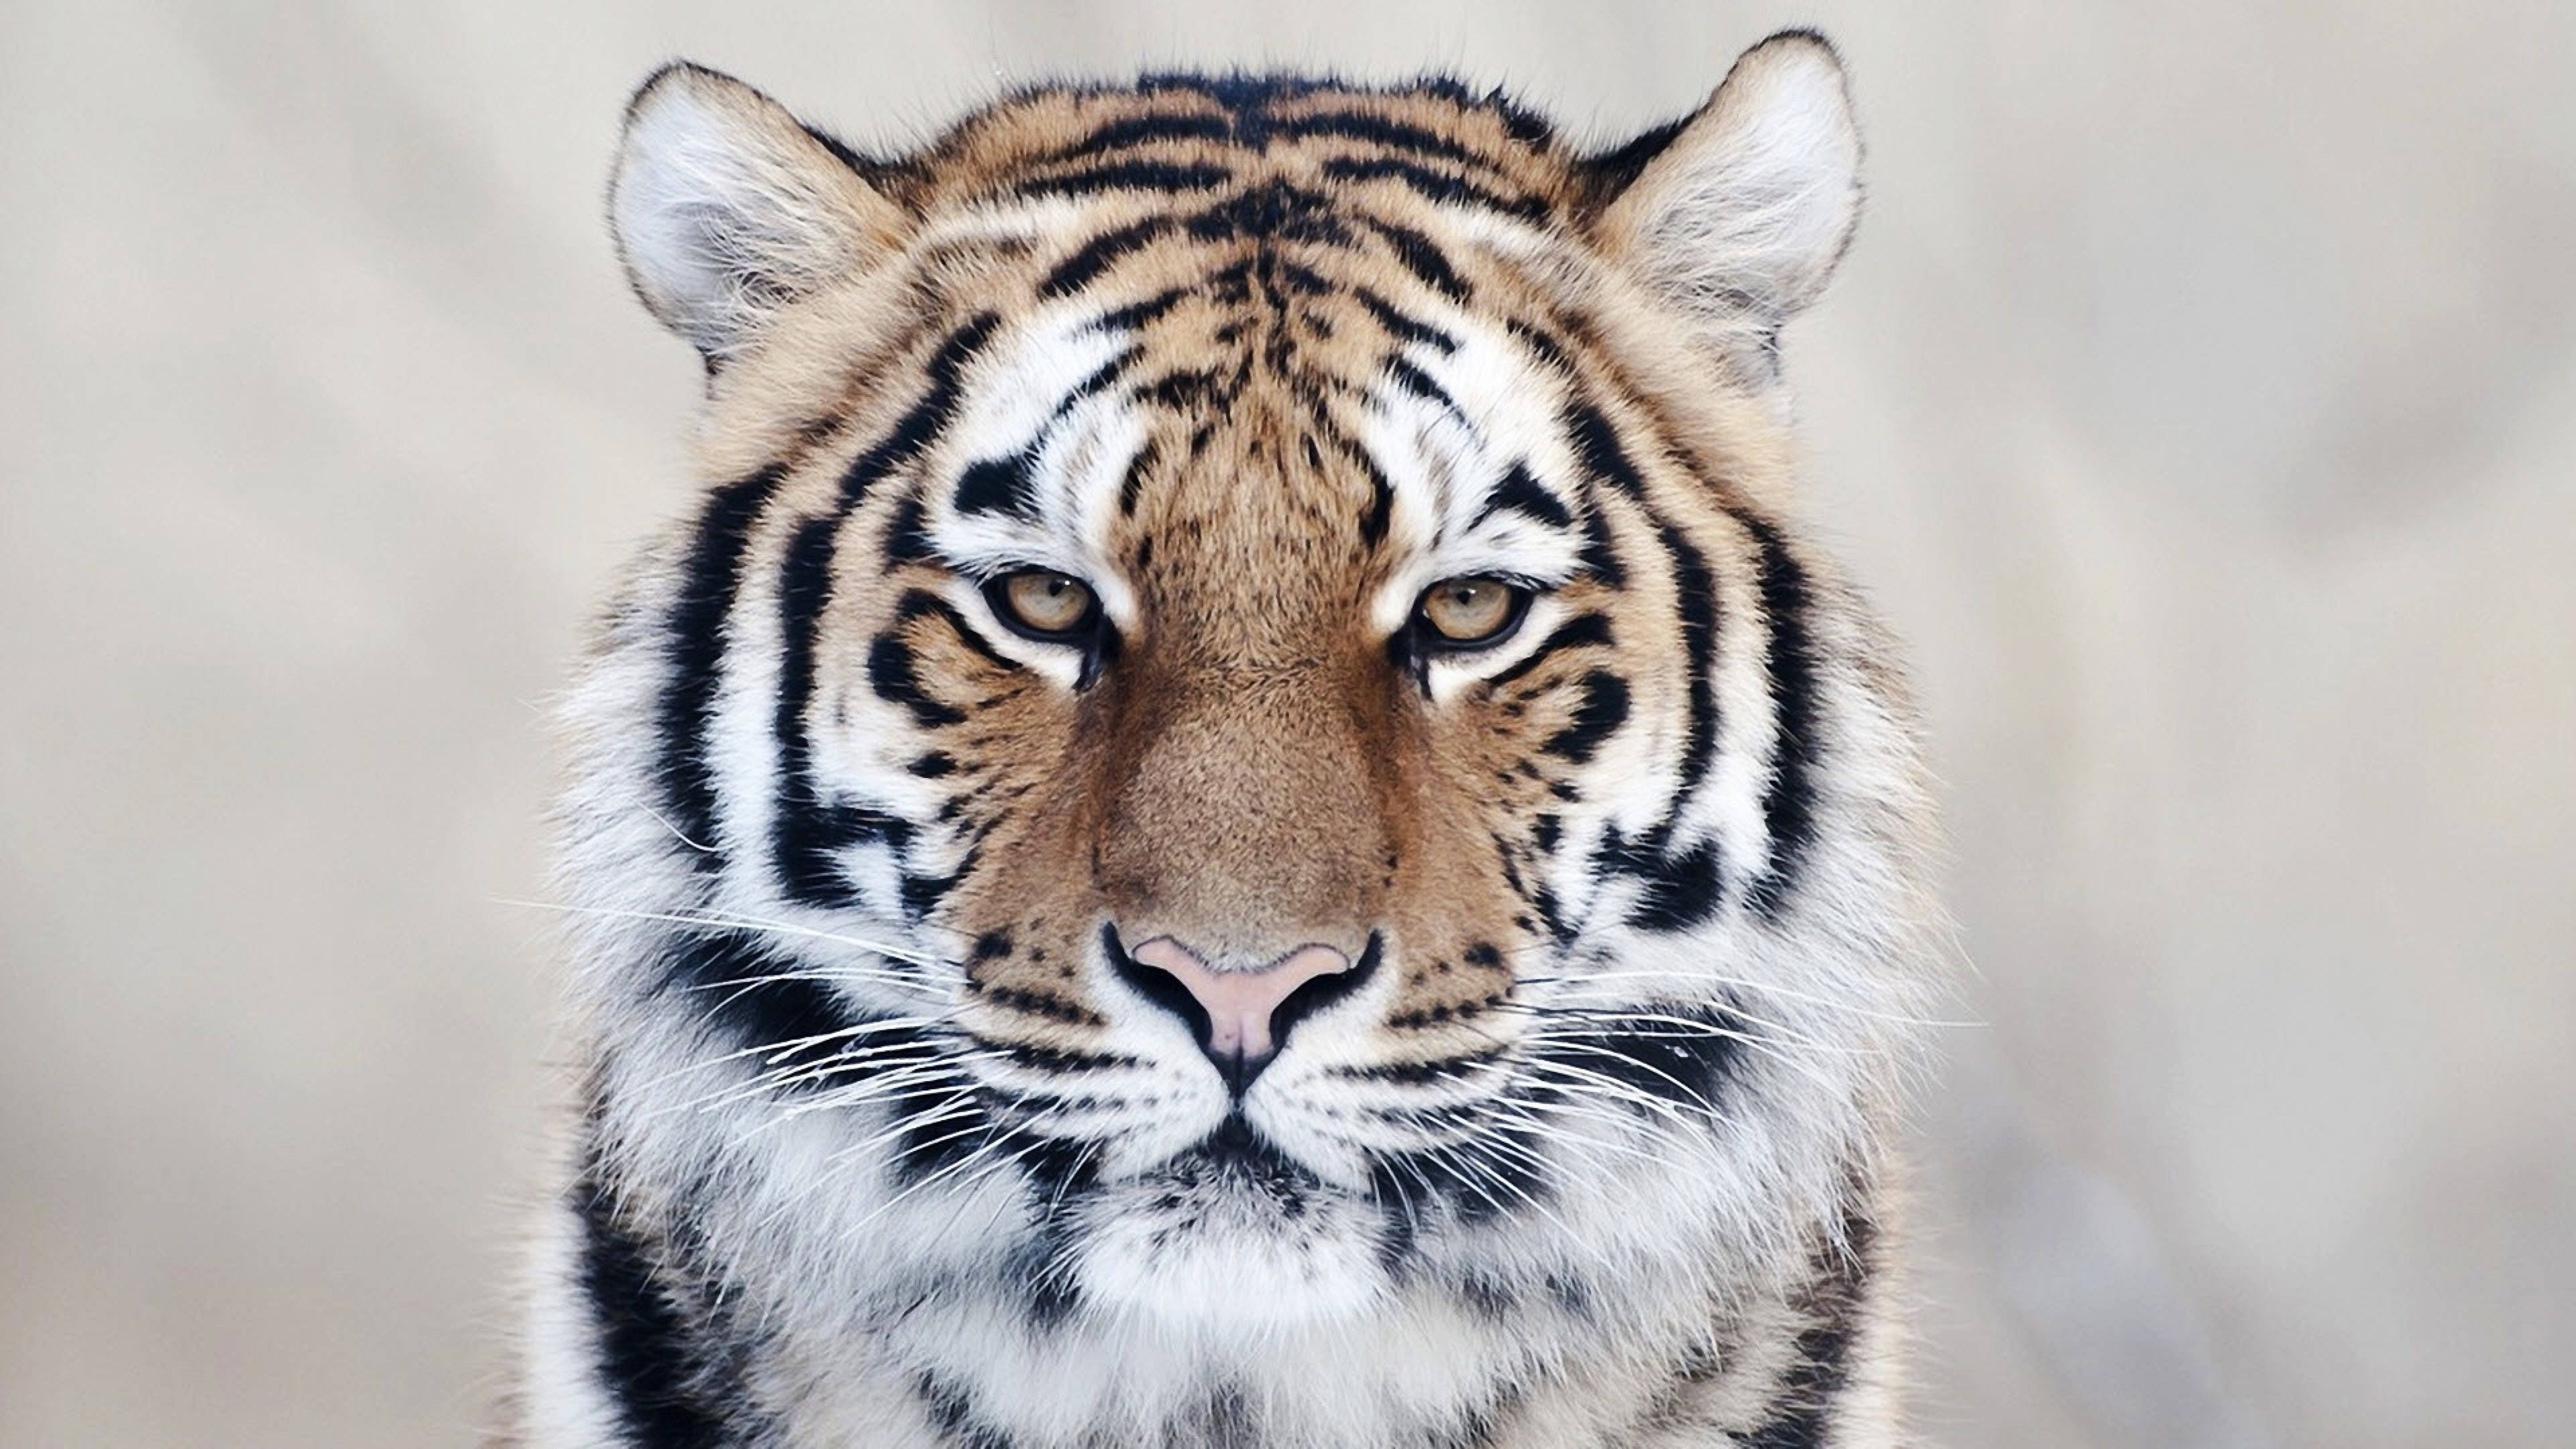 8k Tiger Uhd With Fierce Gaze Background